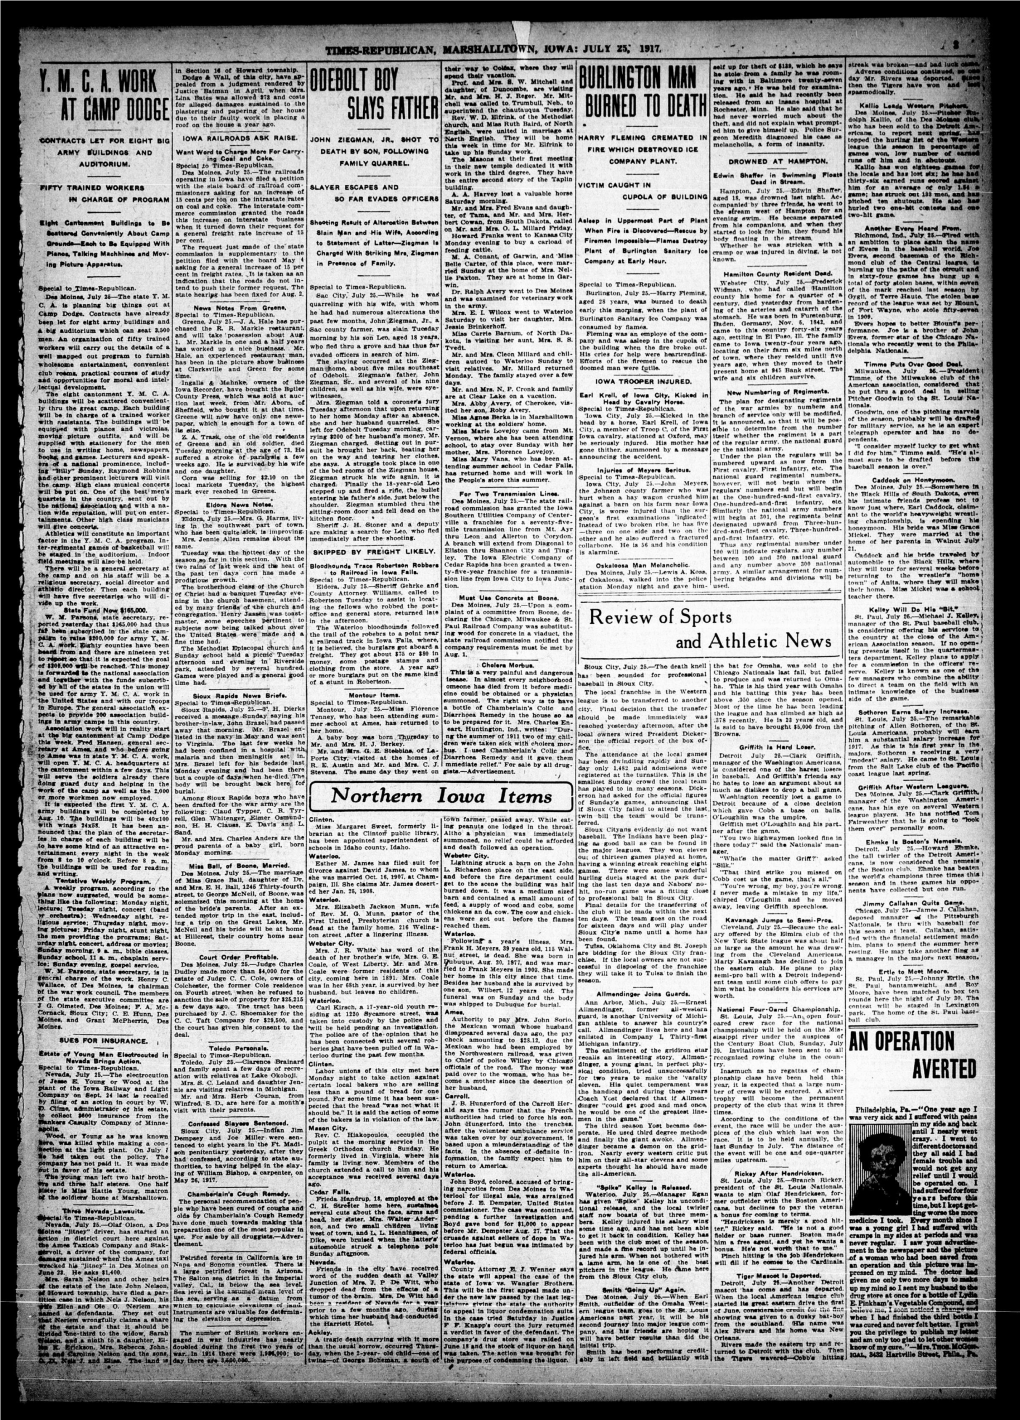 Evening Times-Republican (Marshalltown, Iowa). 1917-07-25